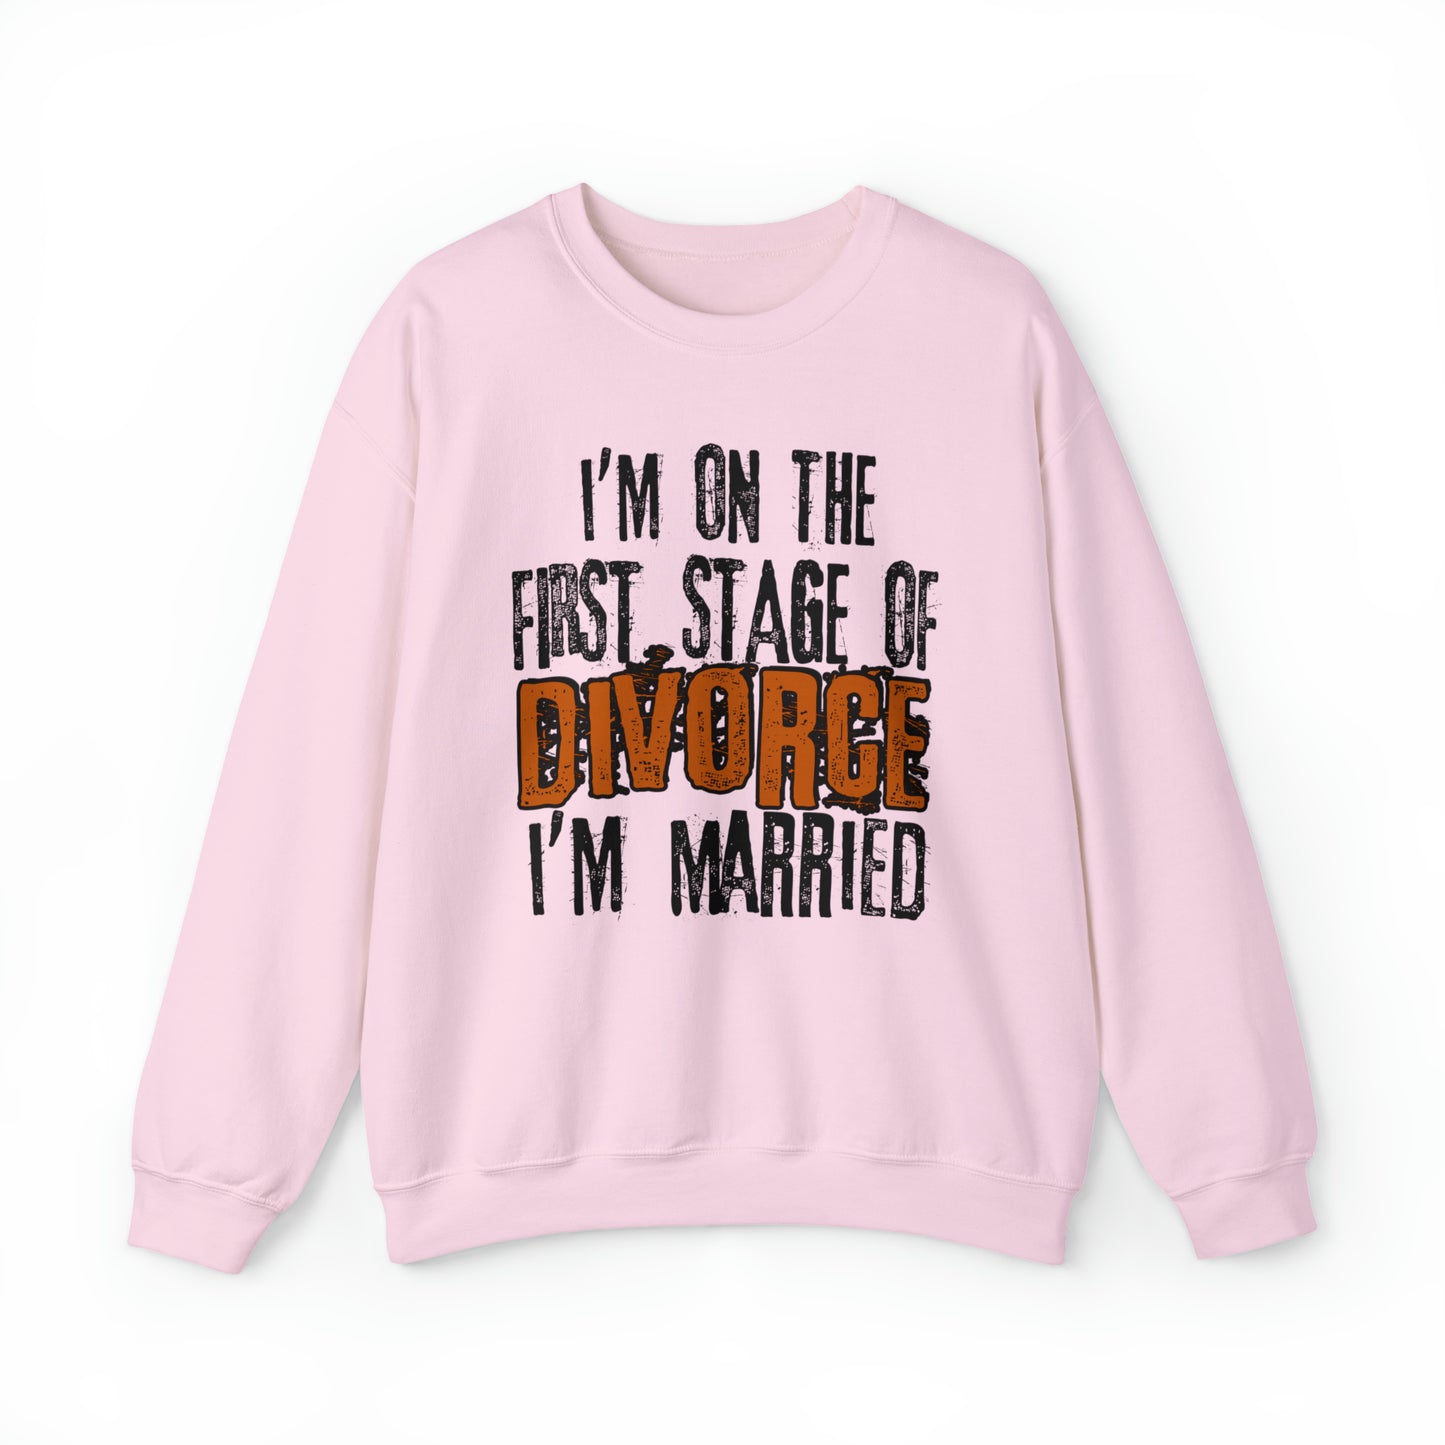 The First Stage of Divorce Sweatshirt